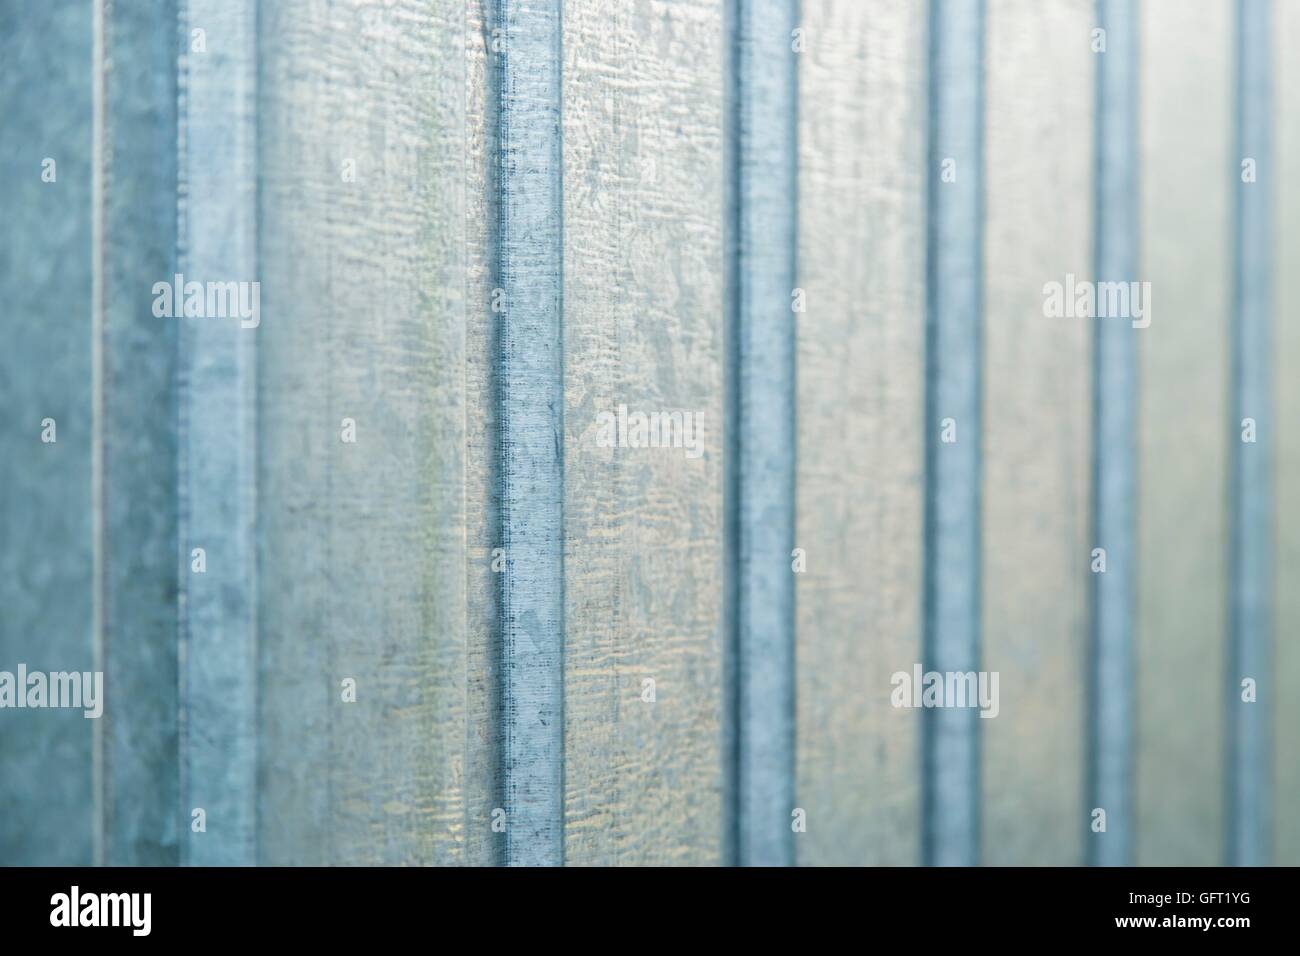 Feuille de métal ondulé texture de fond mur Banque D'Images